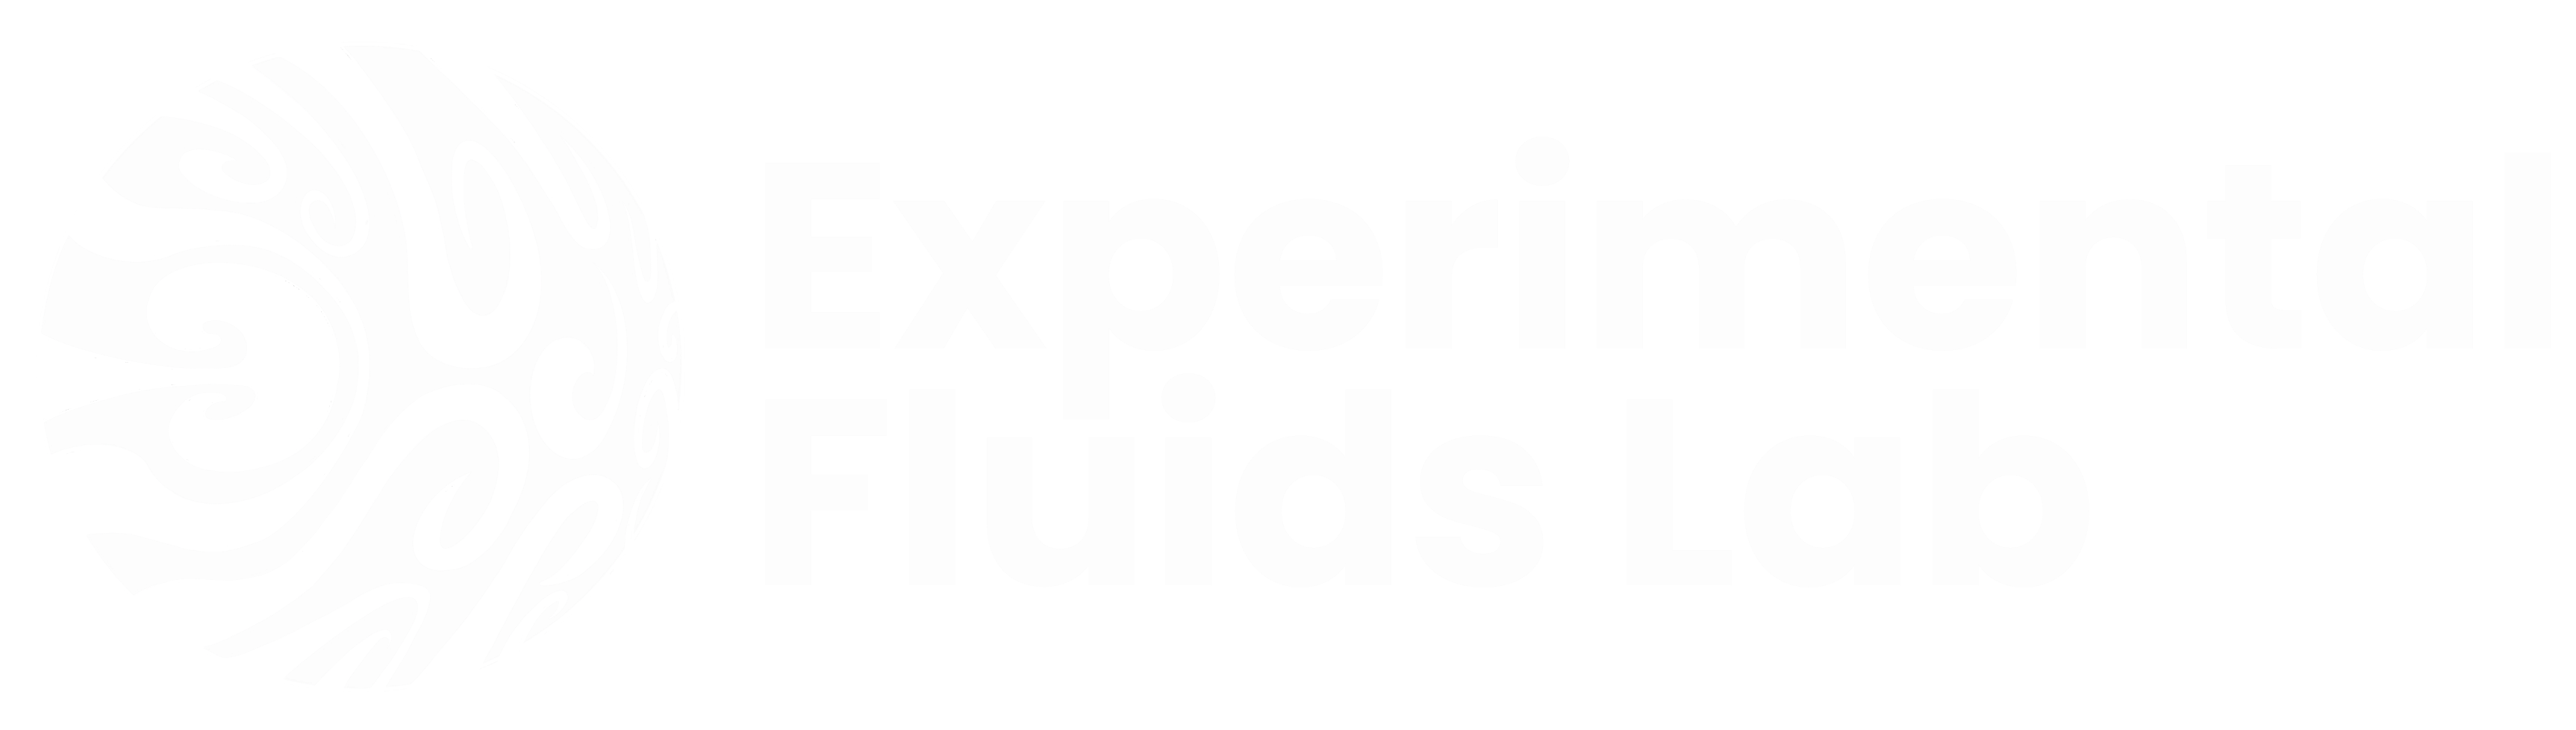 Experimental Fluids Logo